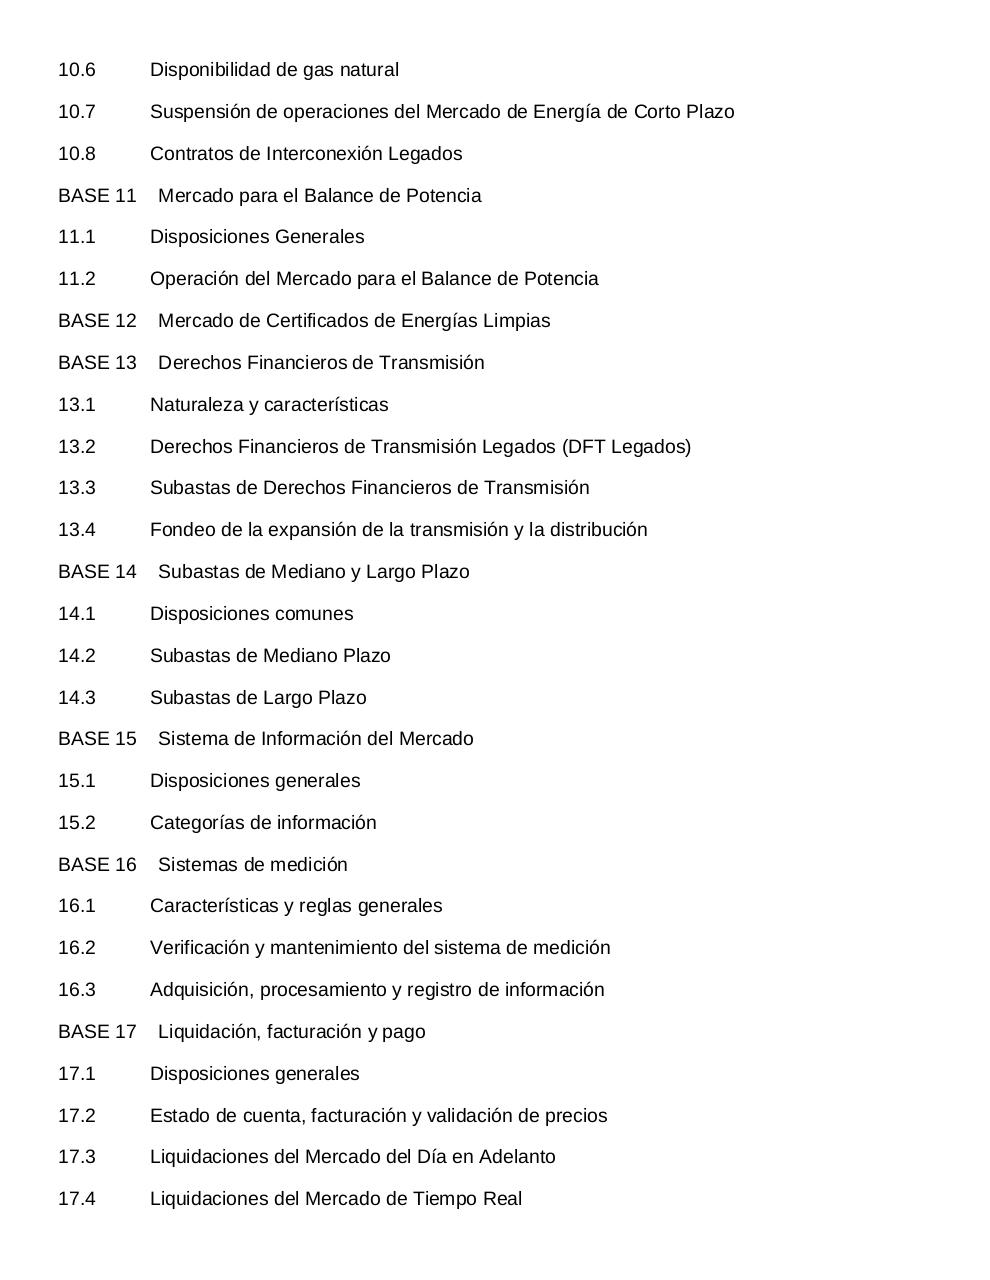 Vista previa del archivo PDF bases-del-mercado-electrico.pdf